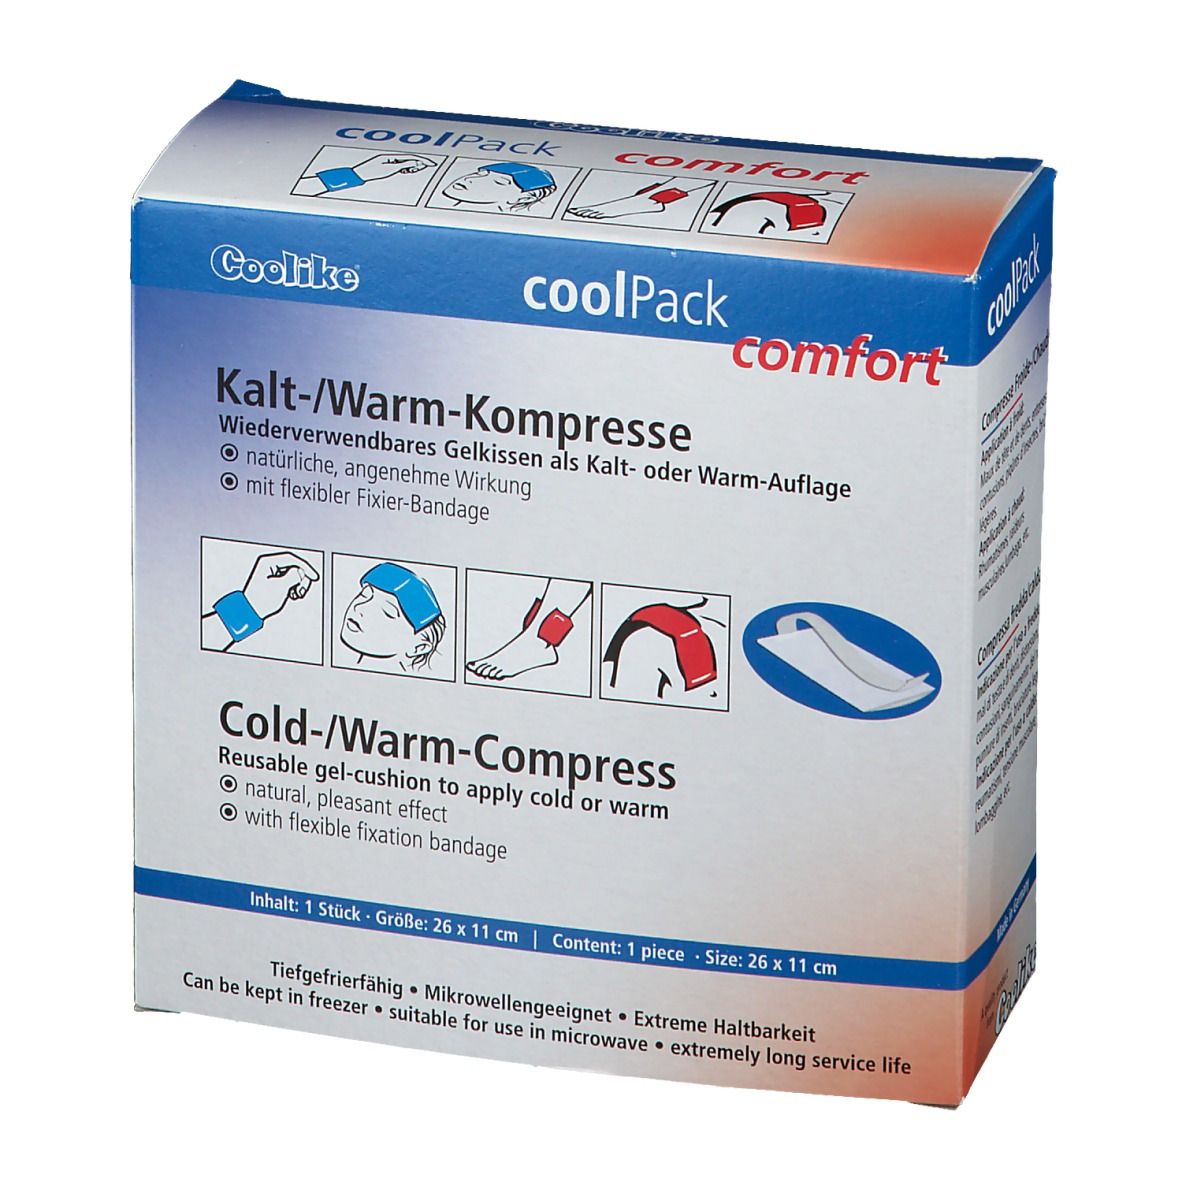 coolPack comfort Kalt-/Warm-Kompresse